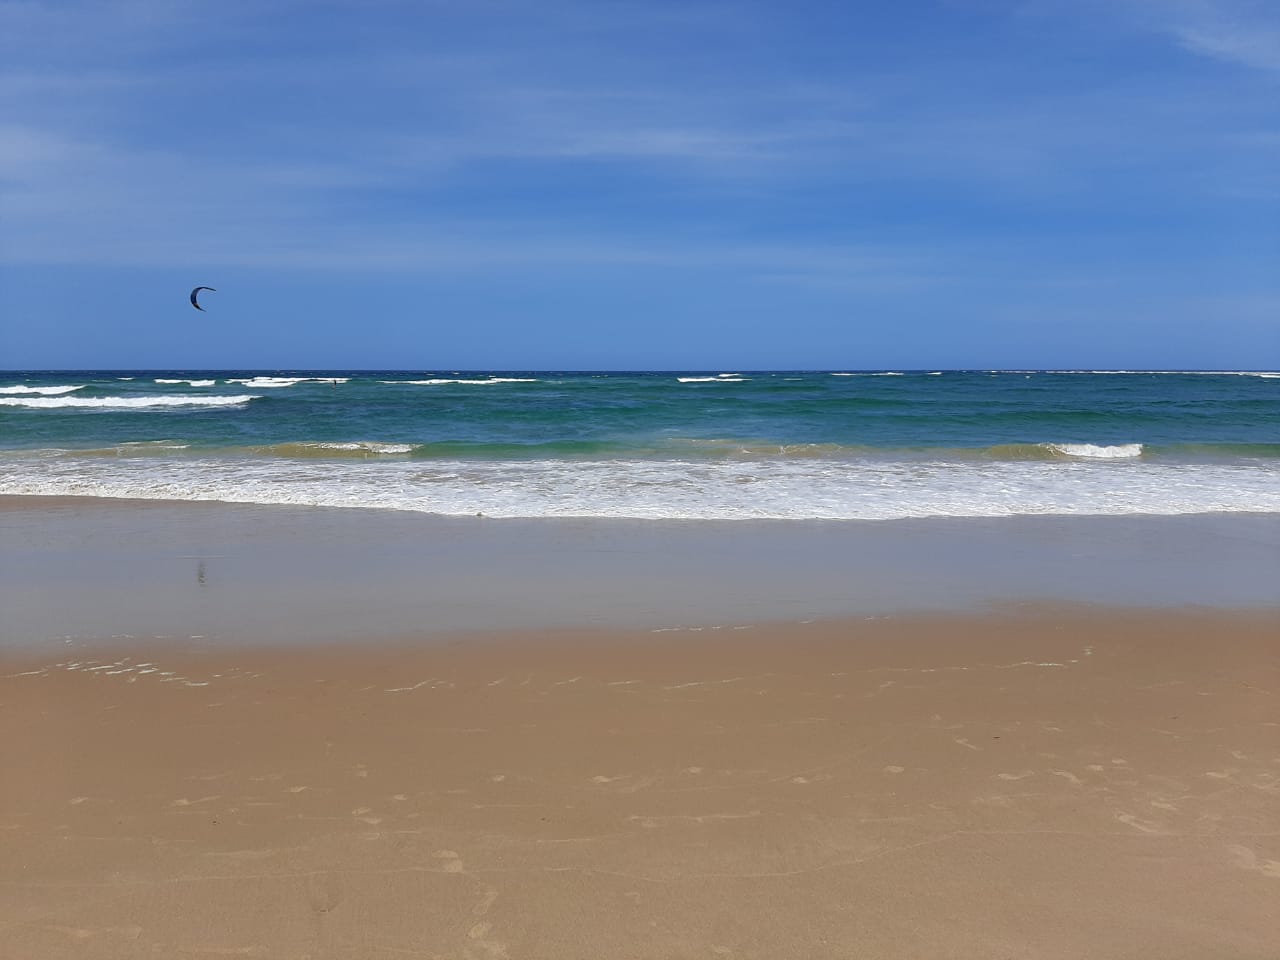 Photo of Praia da Barra with long straight shore